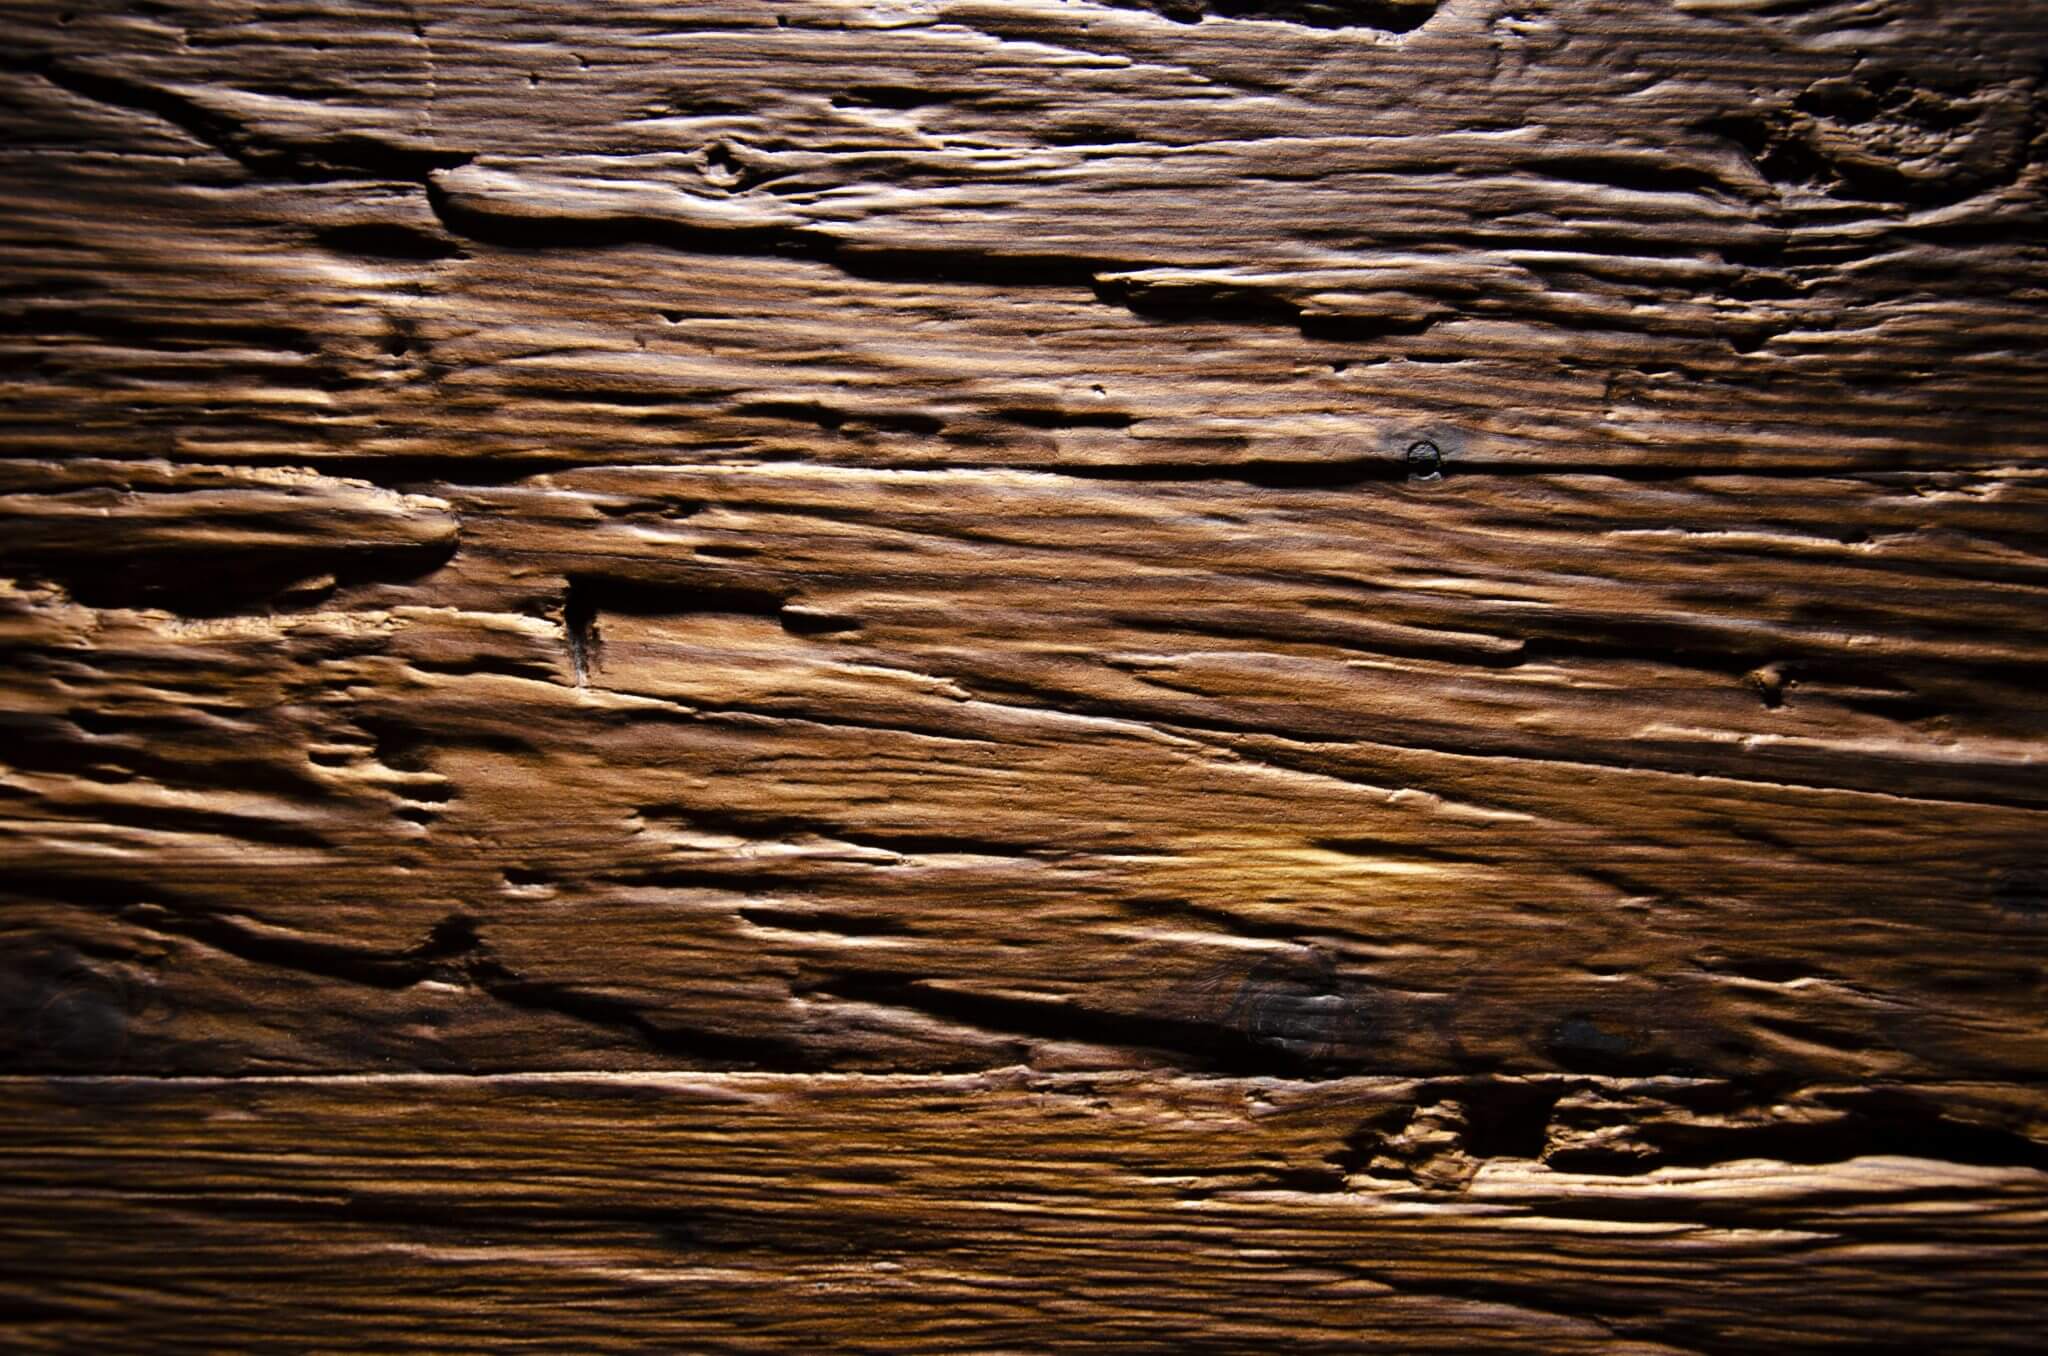 03 – Larch smoked - Real wood veneer